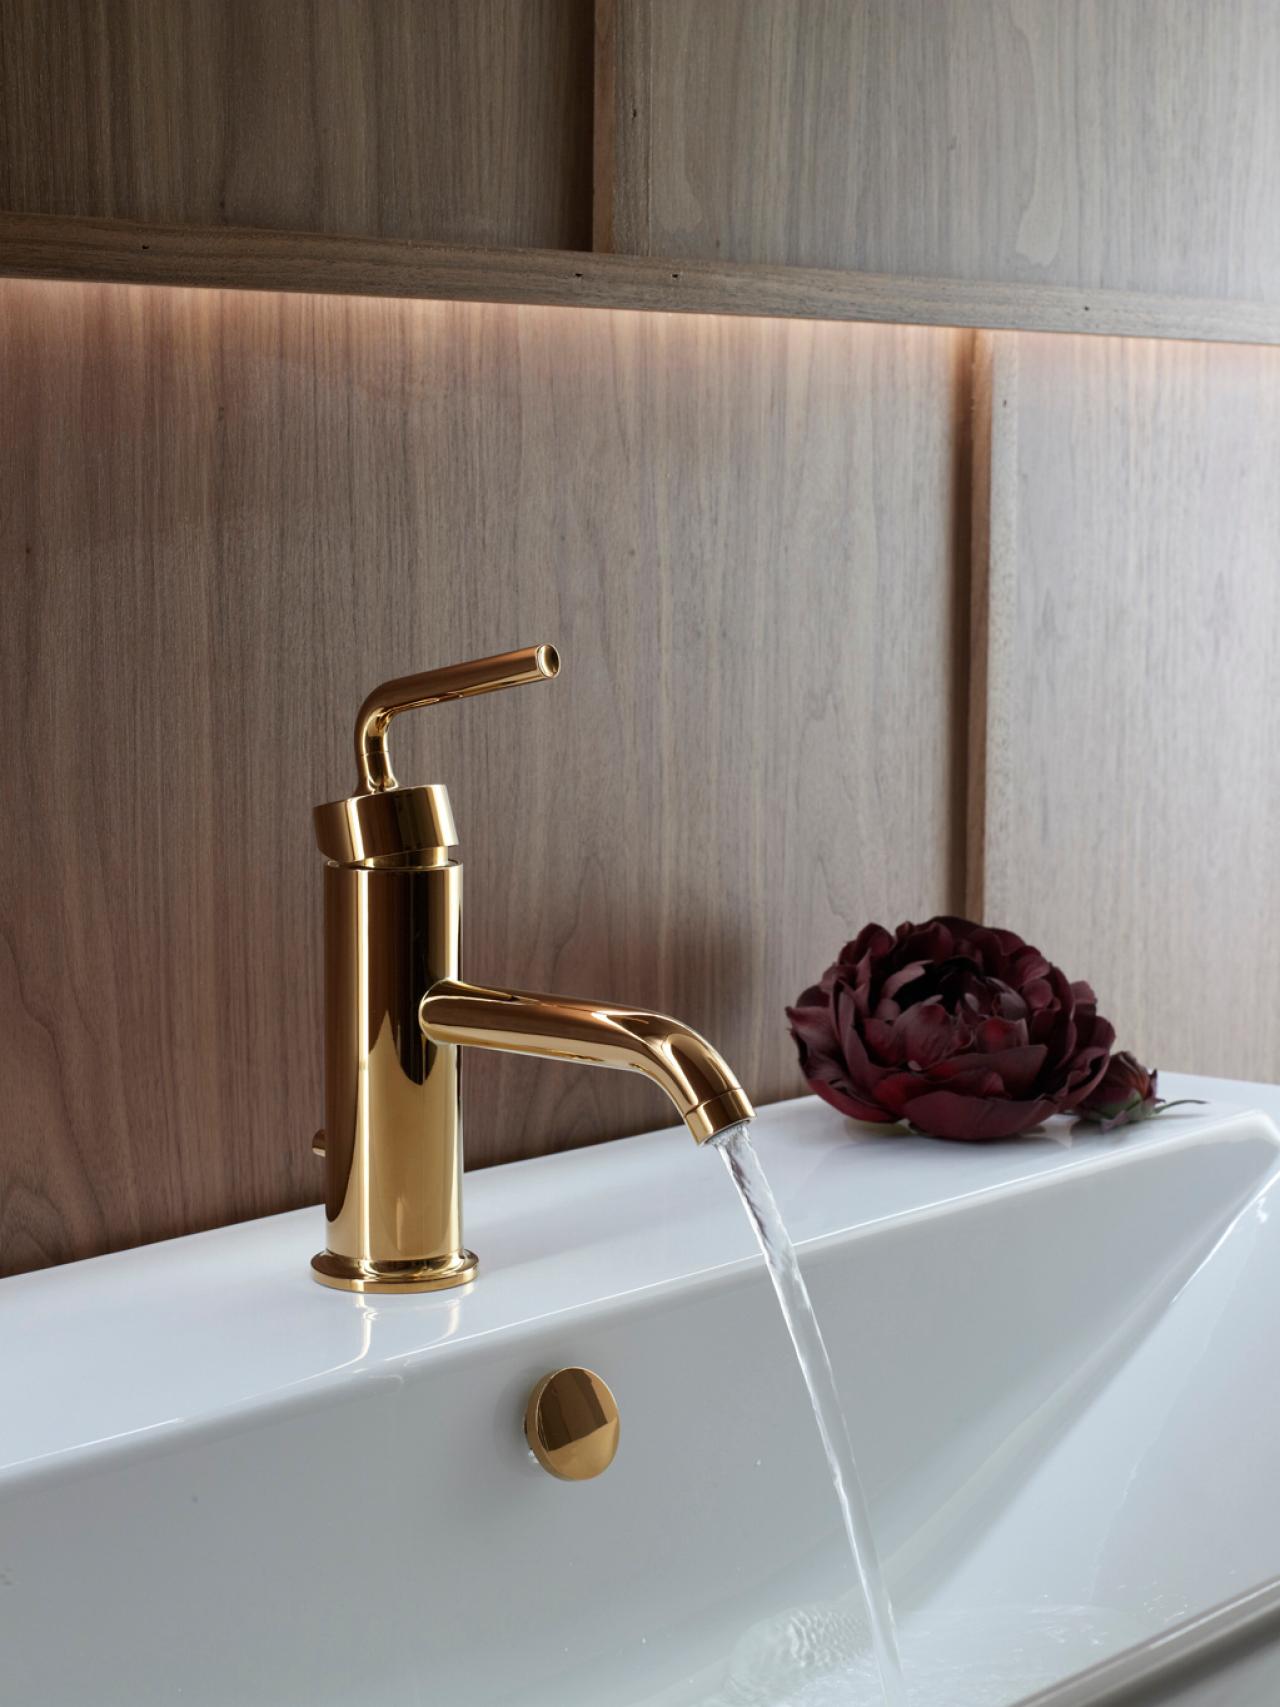 Brass Bathroom Faucets | HGTV
